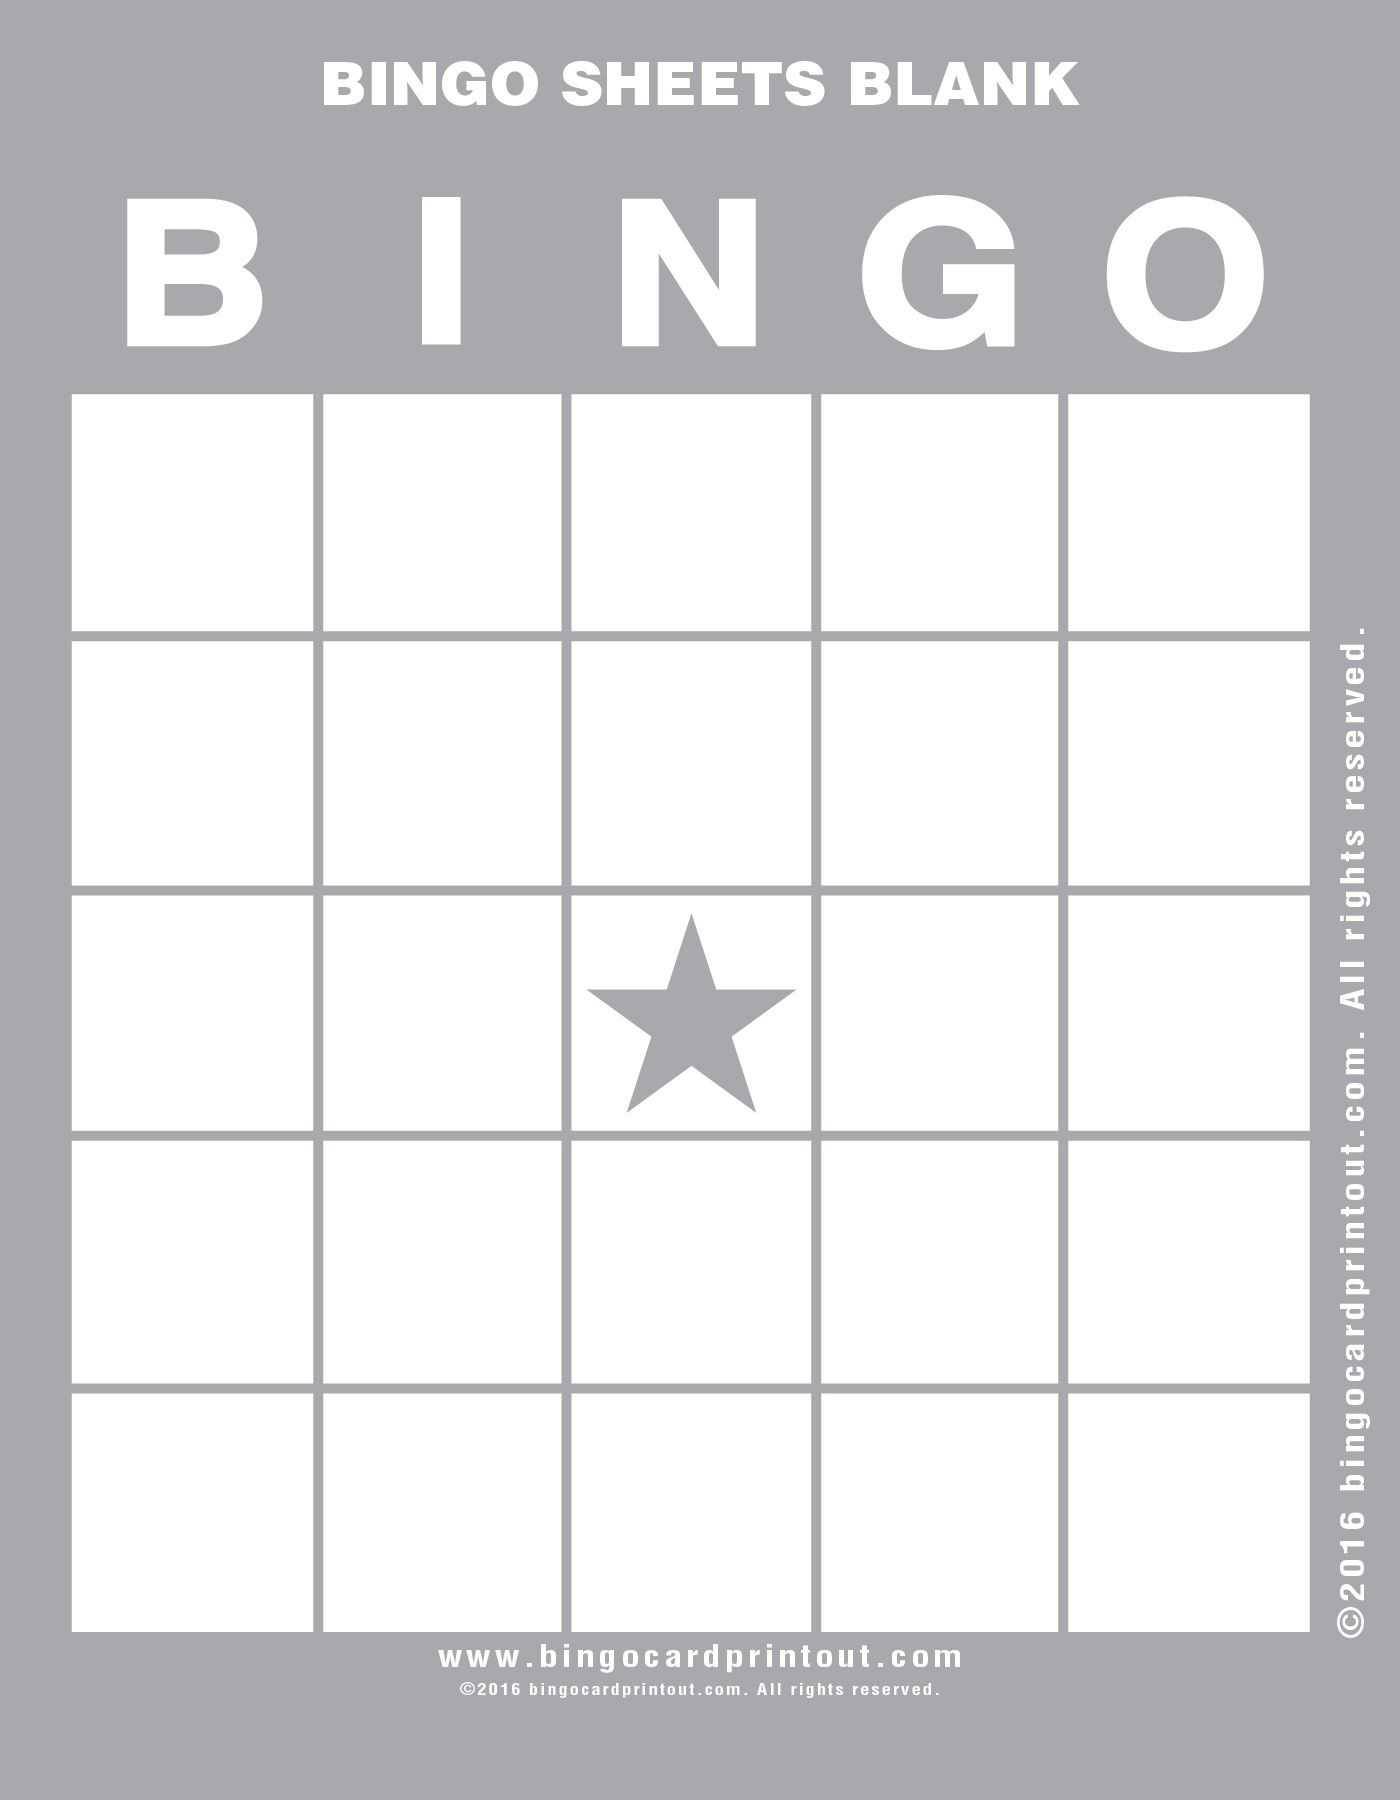 Bingo Sheets Blank 9 | Bingo Sheets Blank In 2019 | Bingo Throughout Blank Bingo Template Pdf